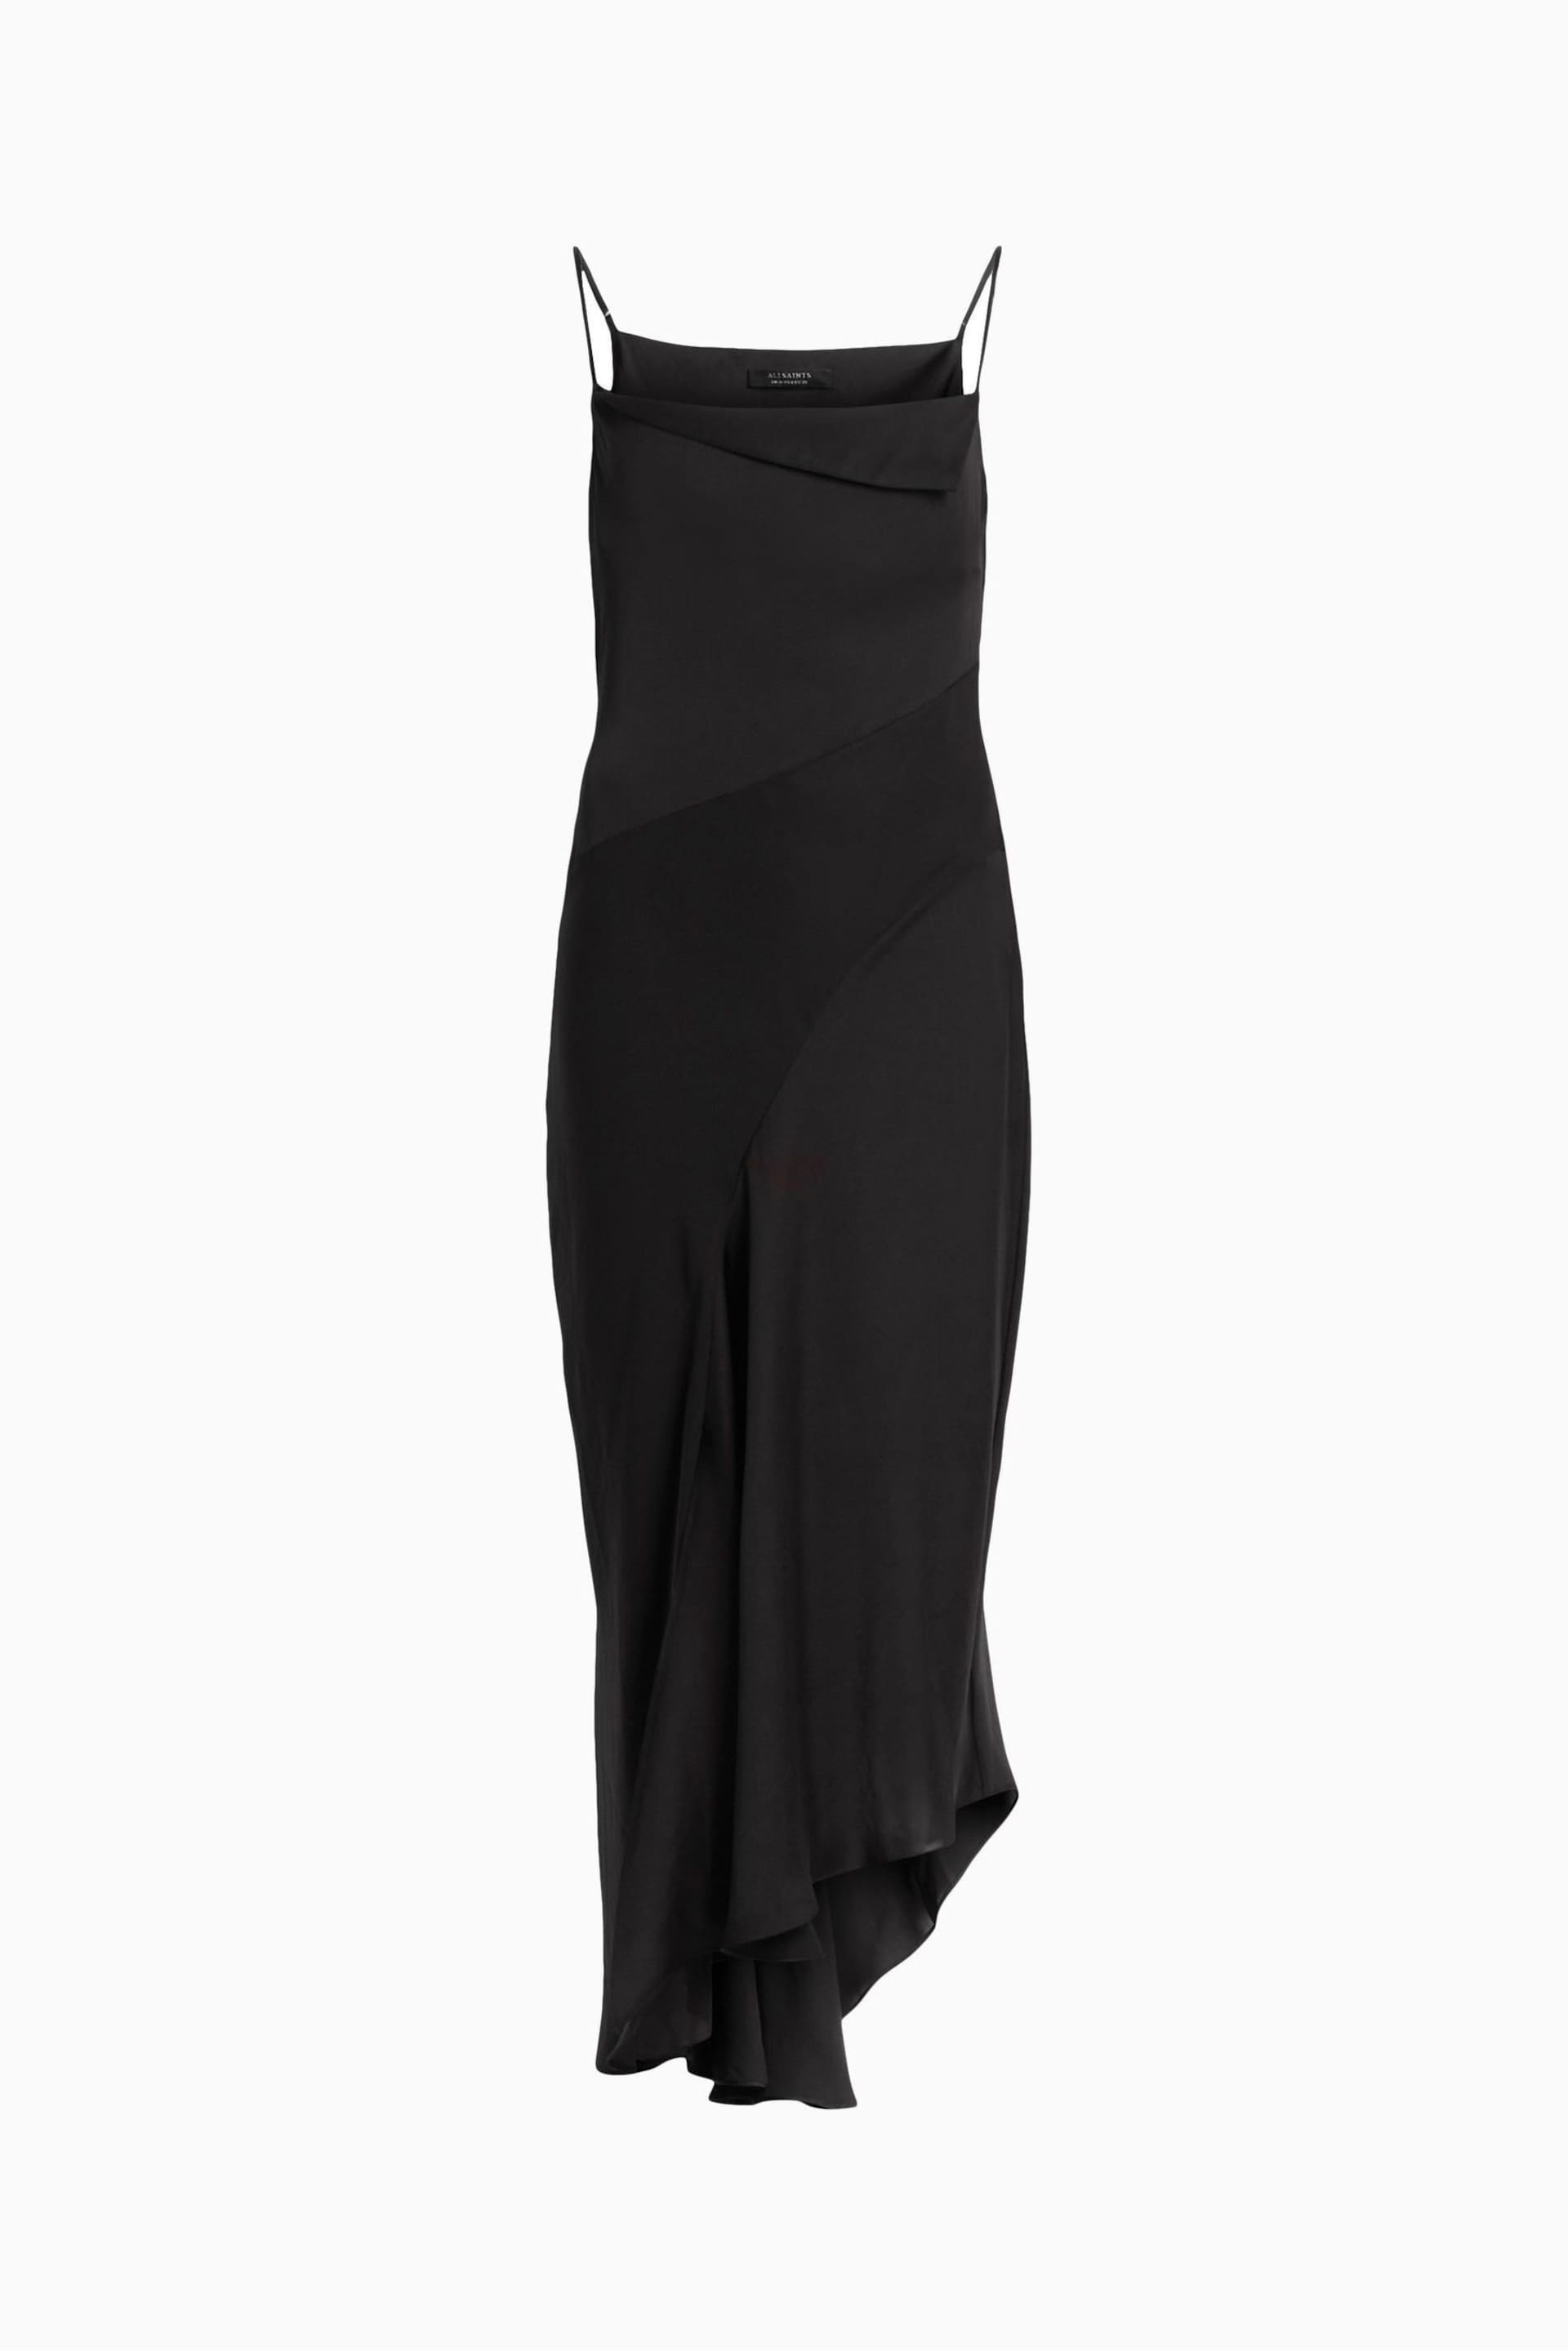 AllSaints Black Dress - Image 6 of 6